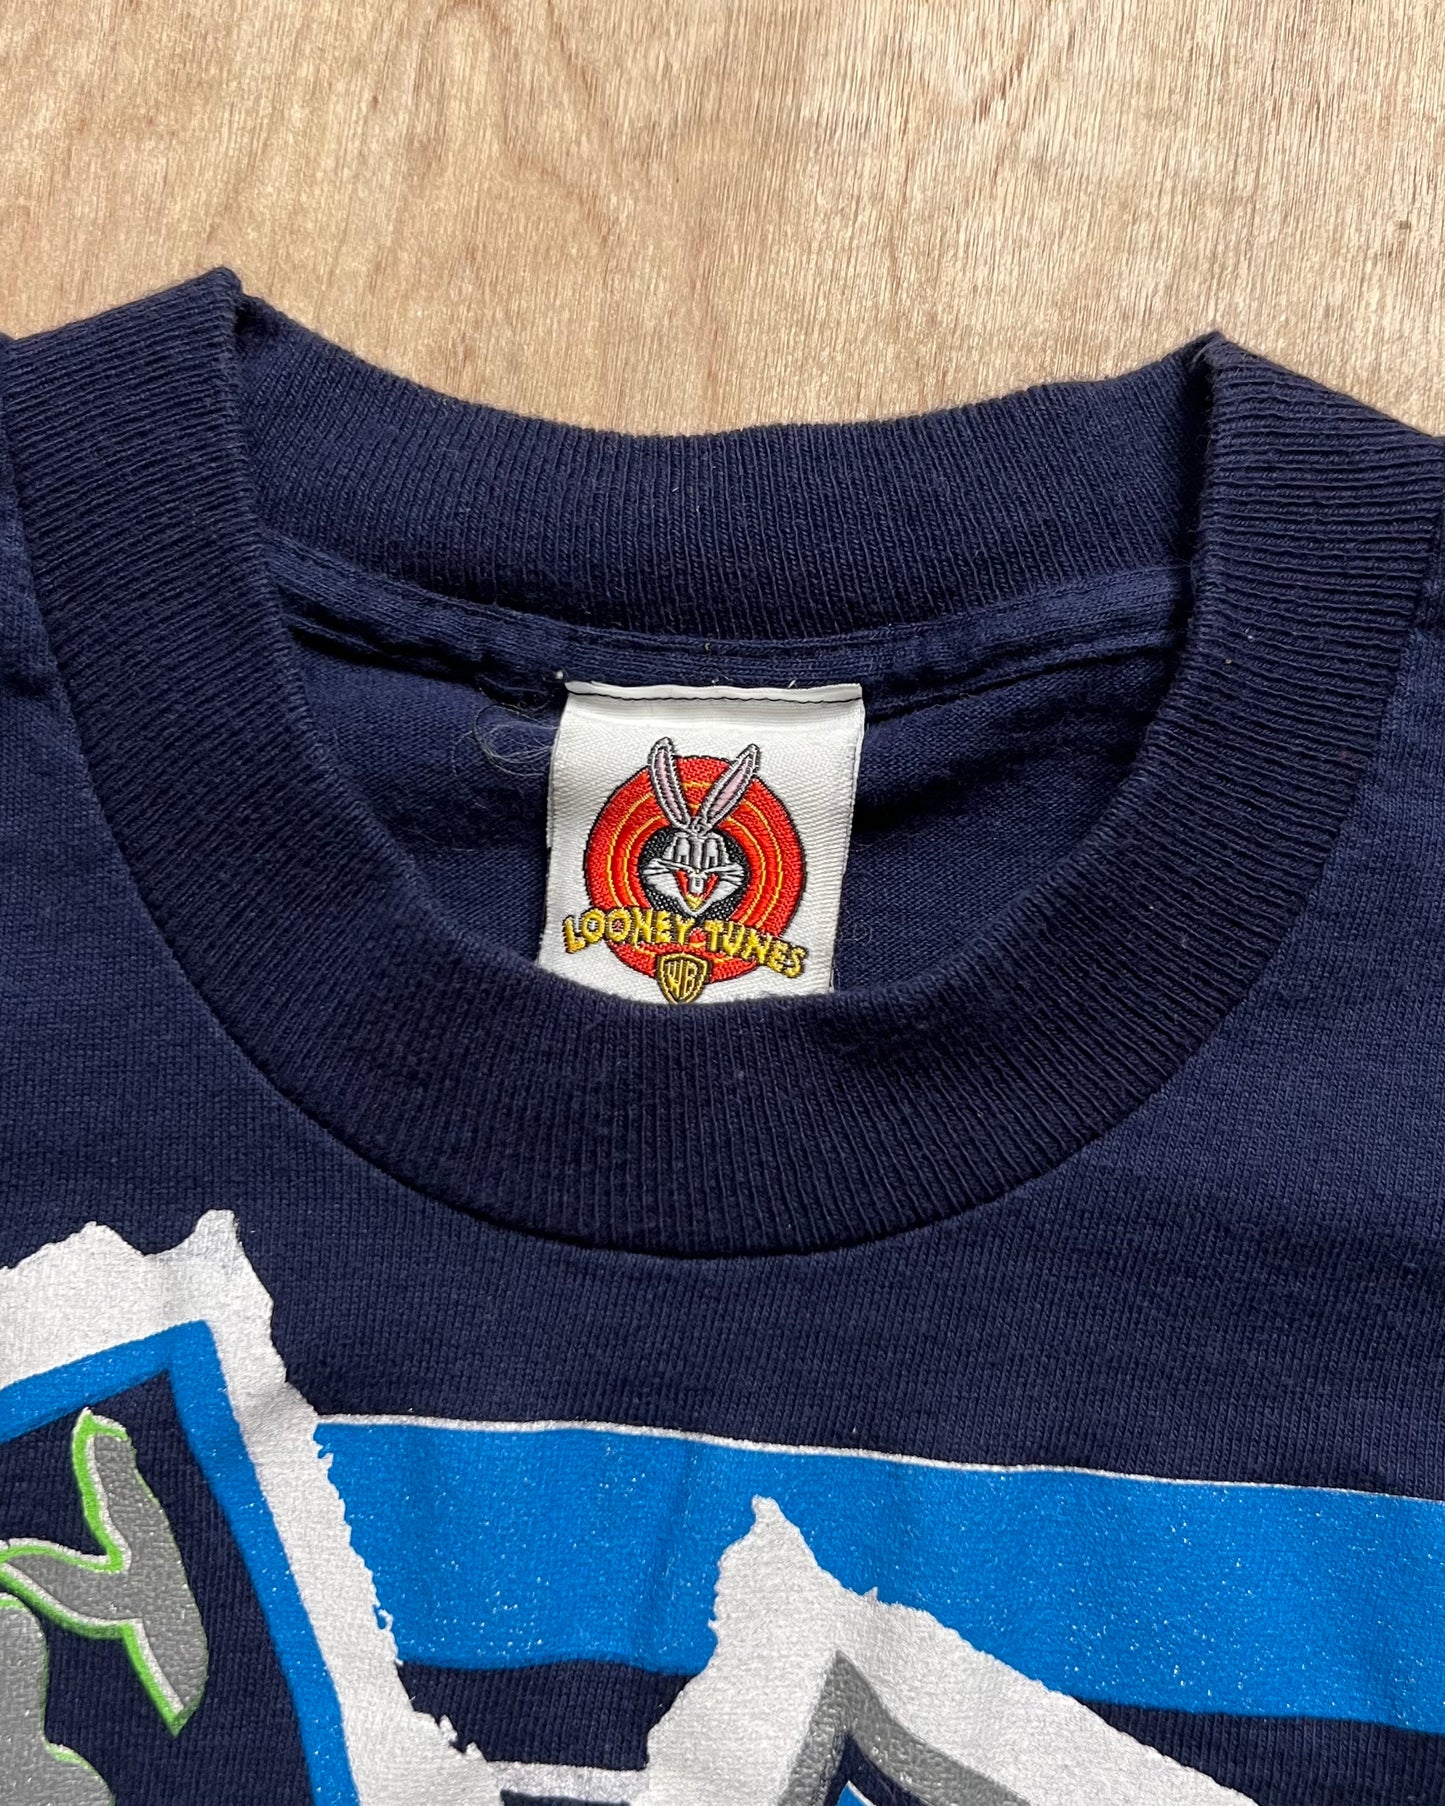 1997 Tweety Bird "Of Course I Have A Pwoblem" Single Stitch T-Shirt